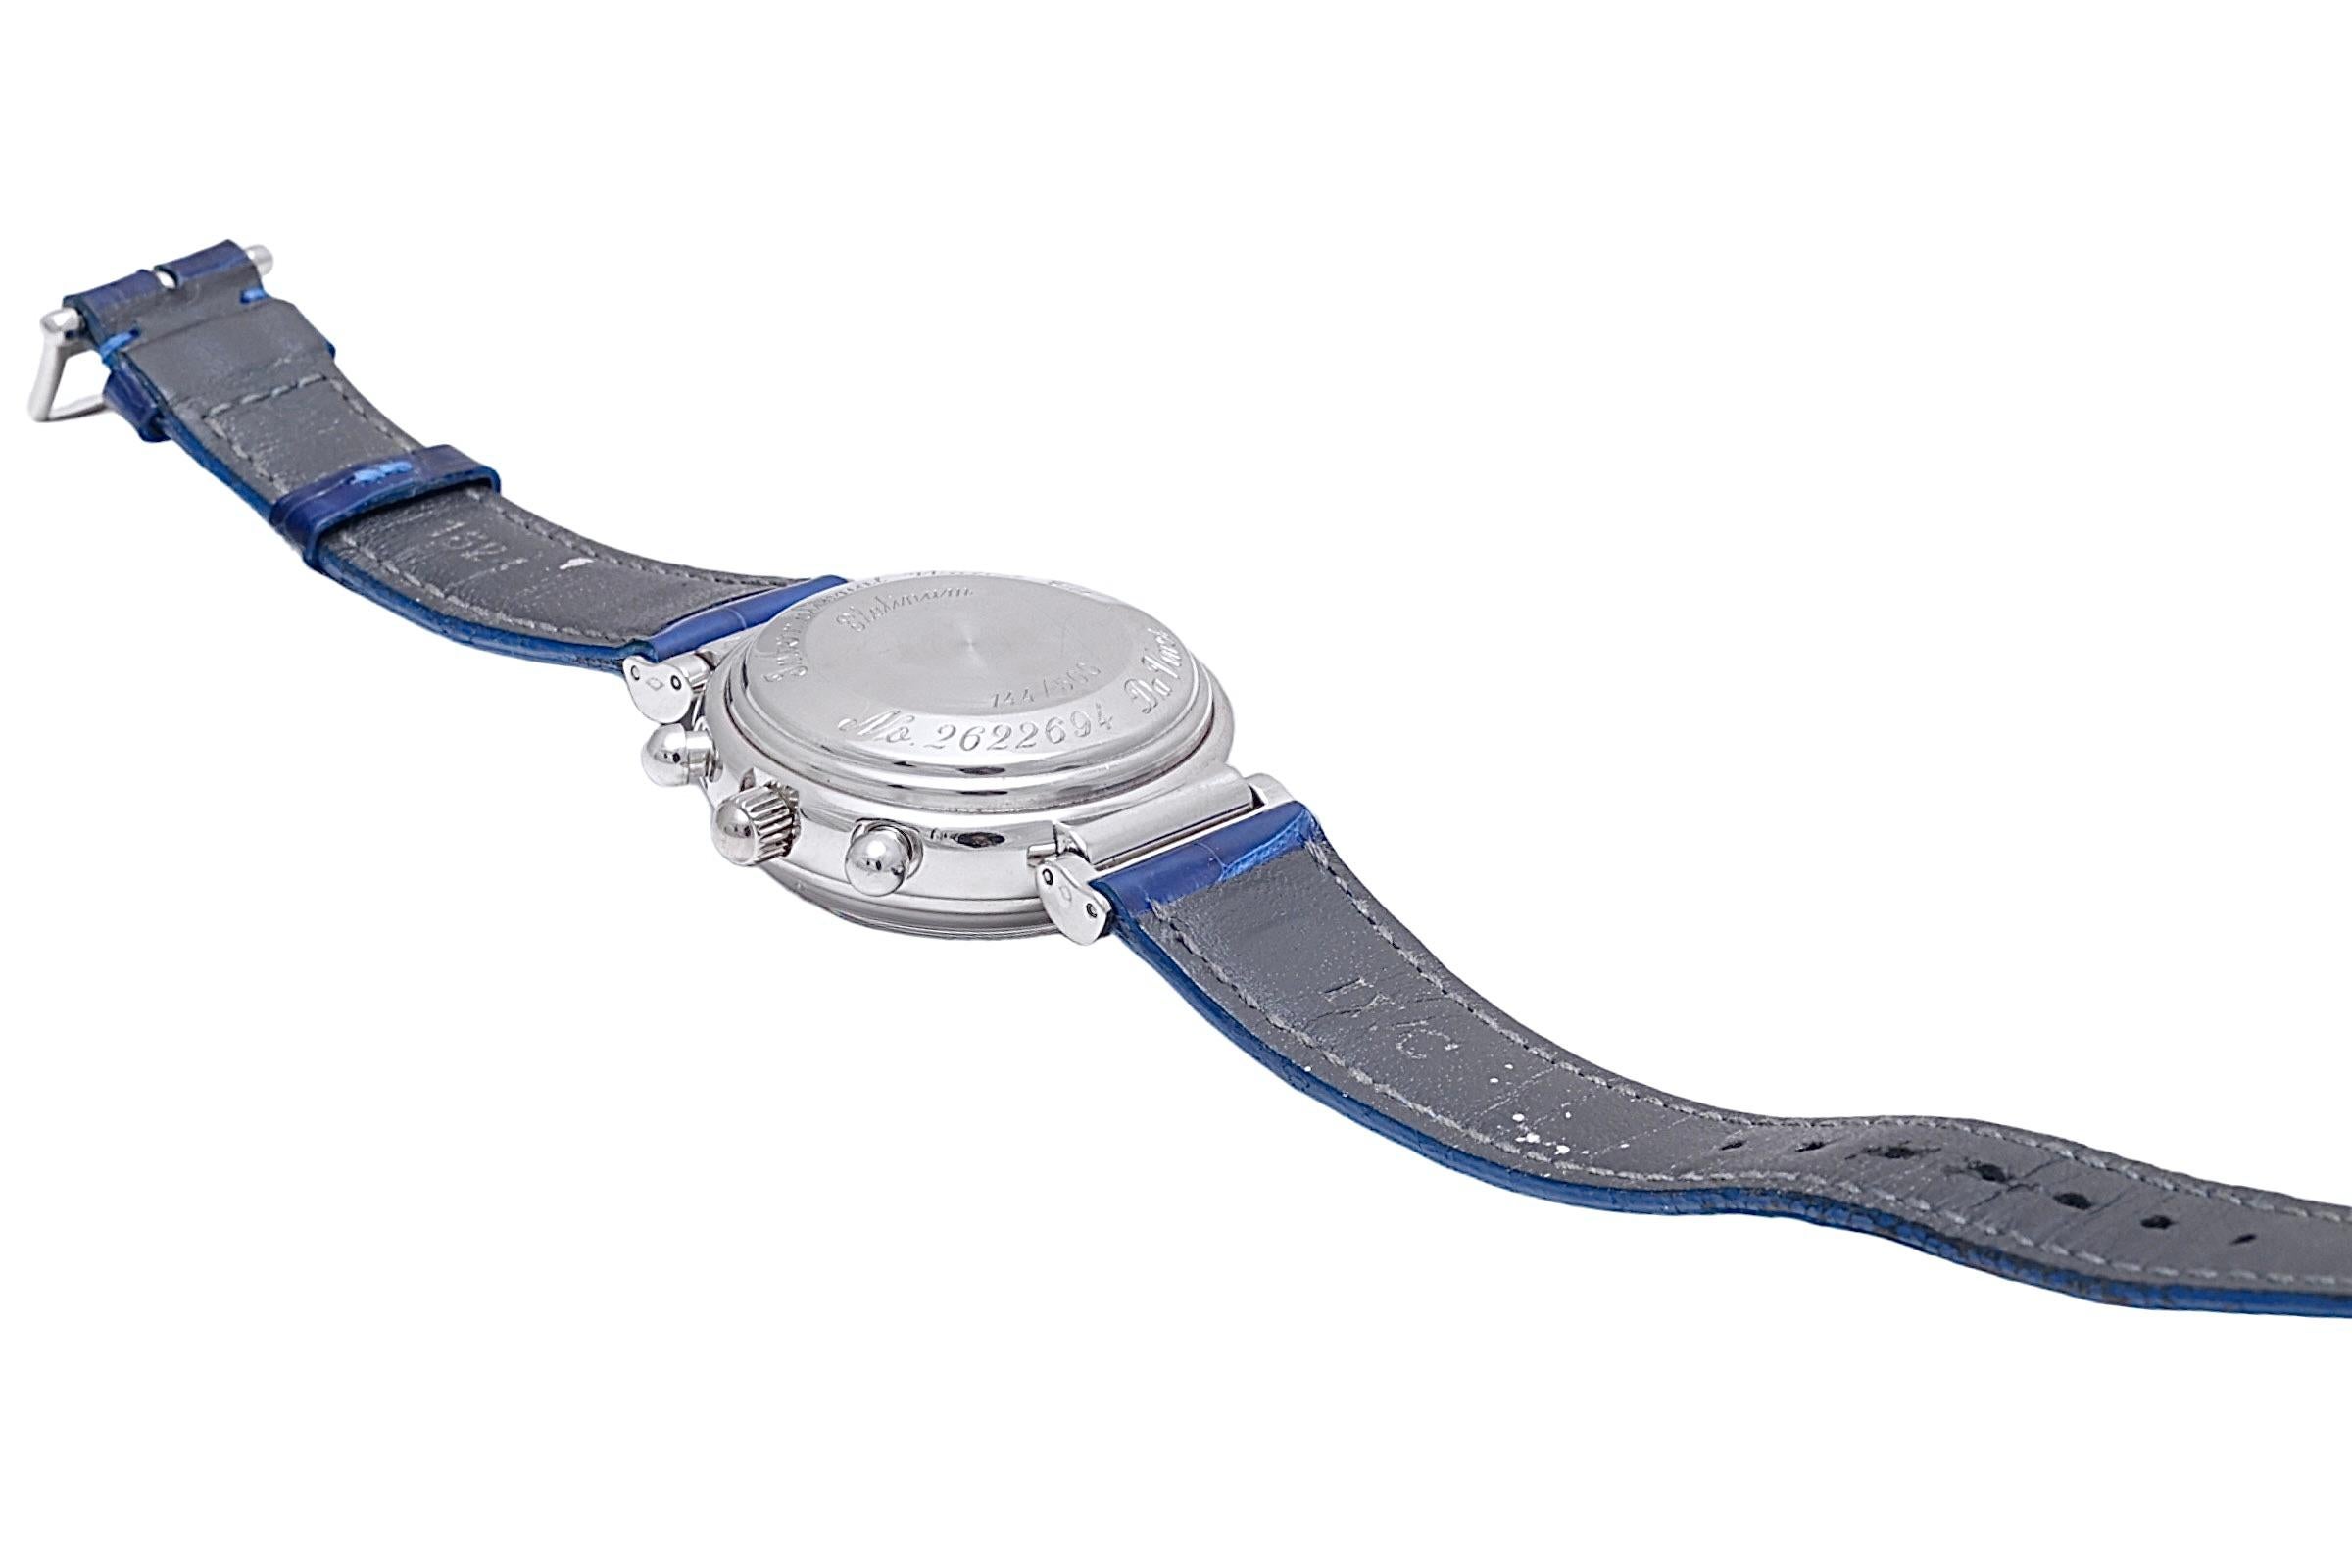 Platinum IWC Perpetual Calendar Split Second Chronograph Limited Wrist Watch3751 For Sale 7